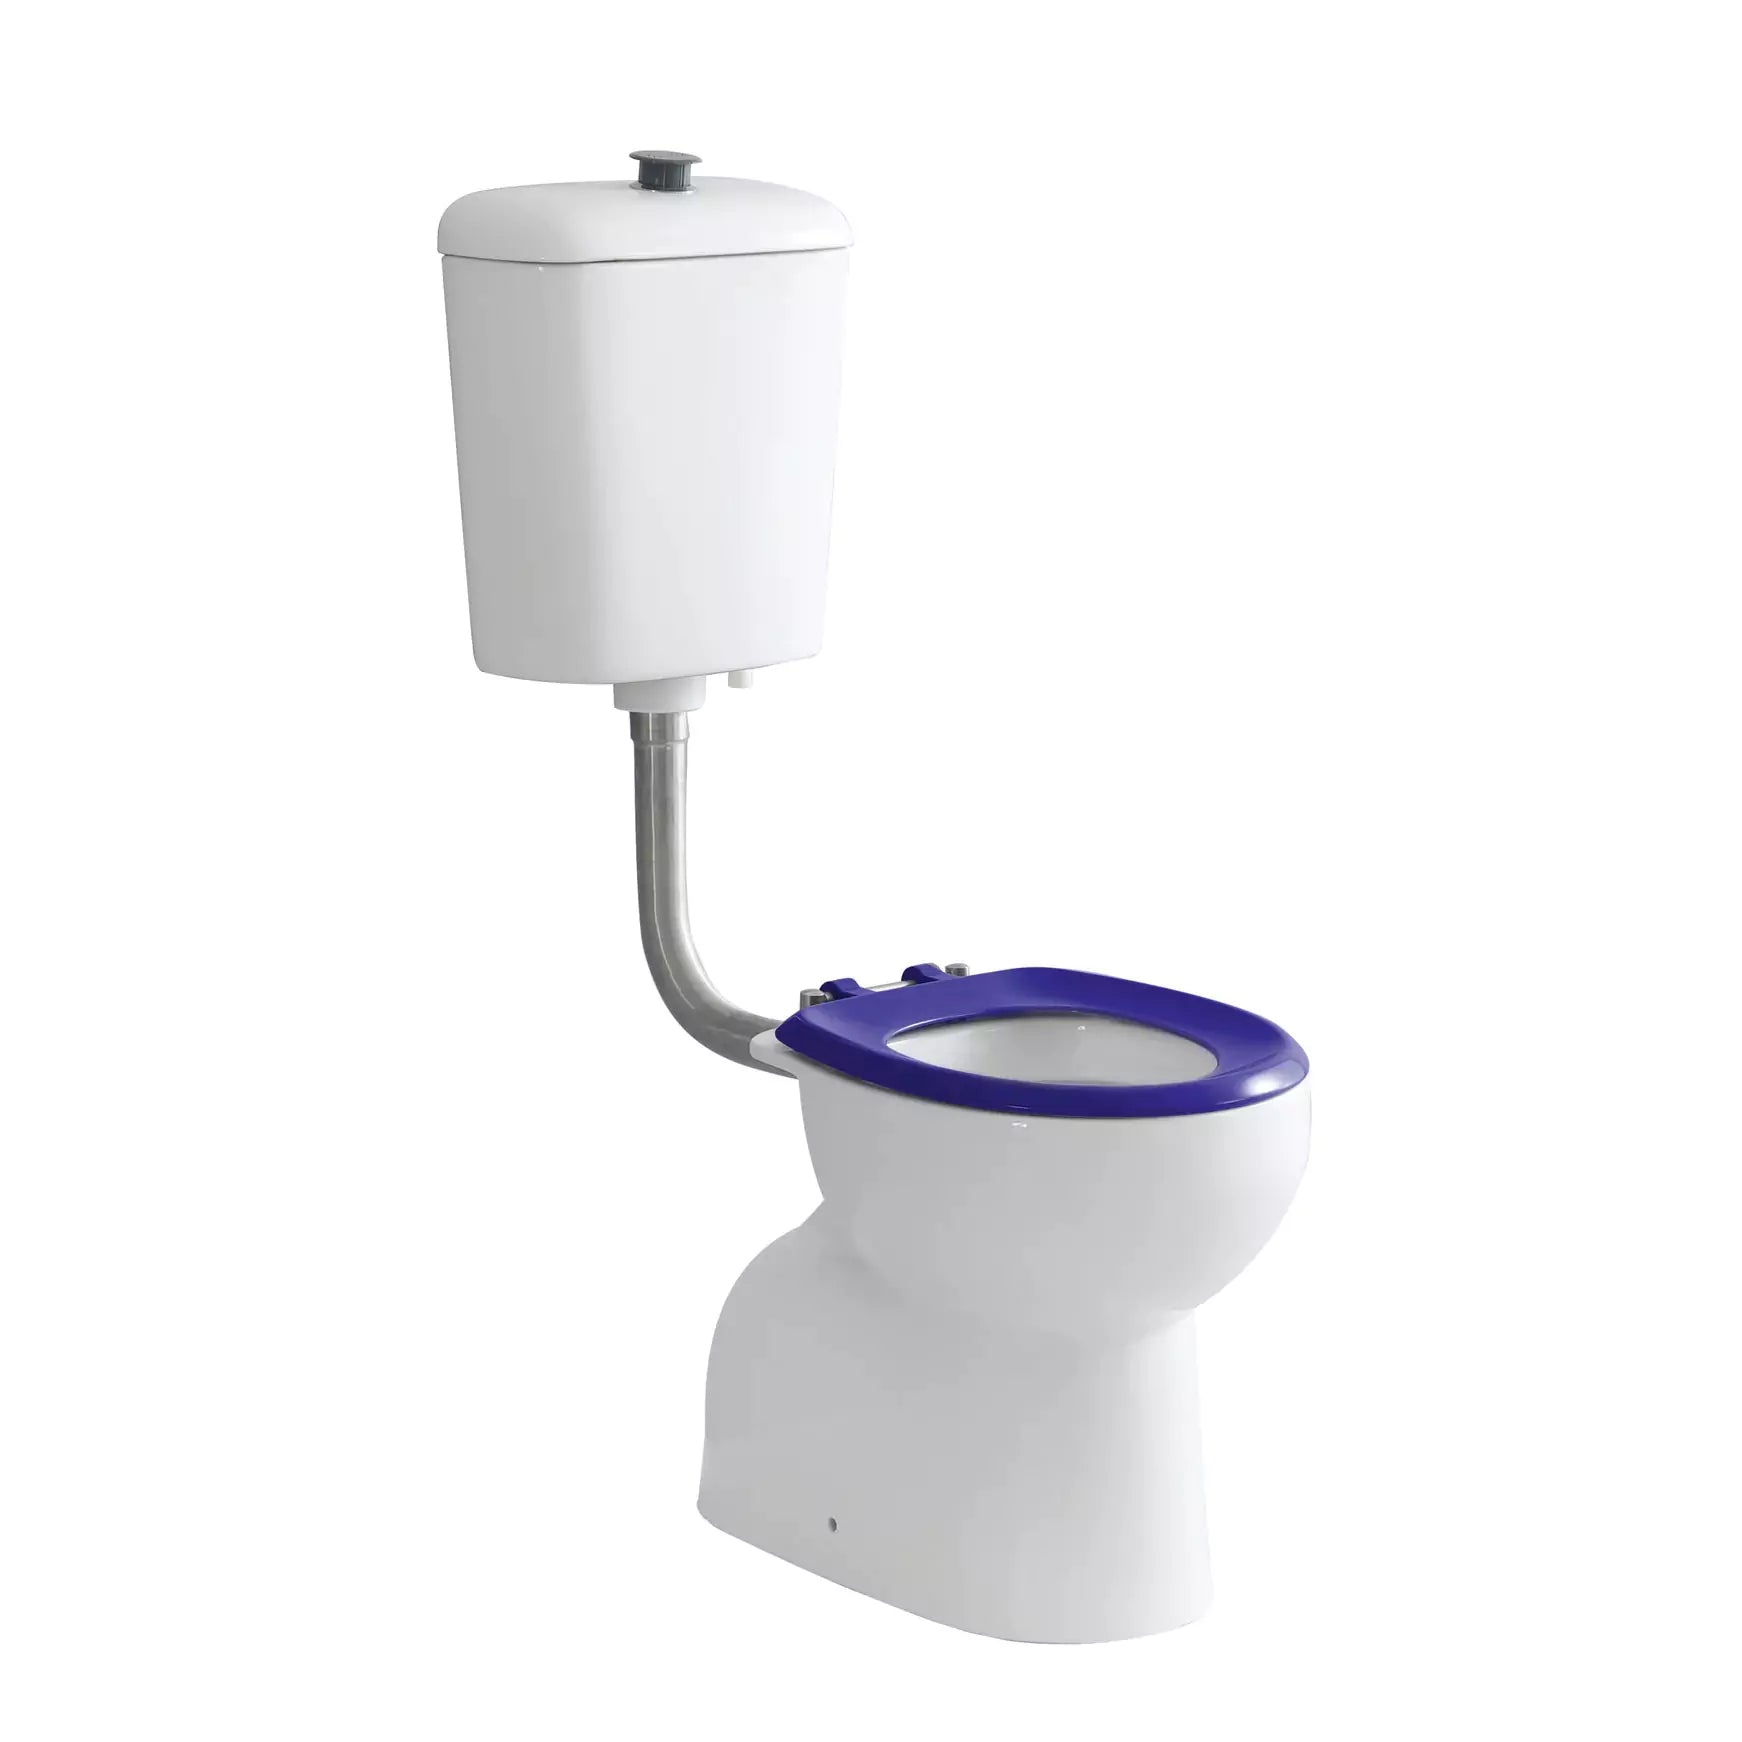 Calla Disable Toilet Suite: Accessible Toilet Suite with Calla Design-Gloss White-KDK024C-G/KDK024P-G